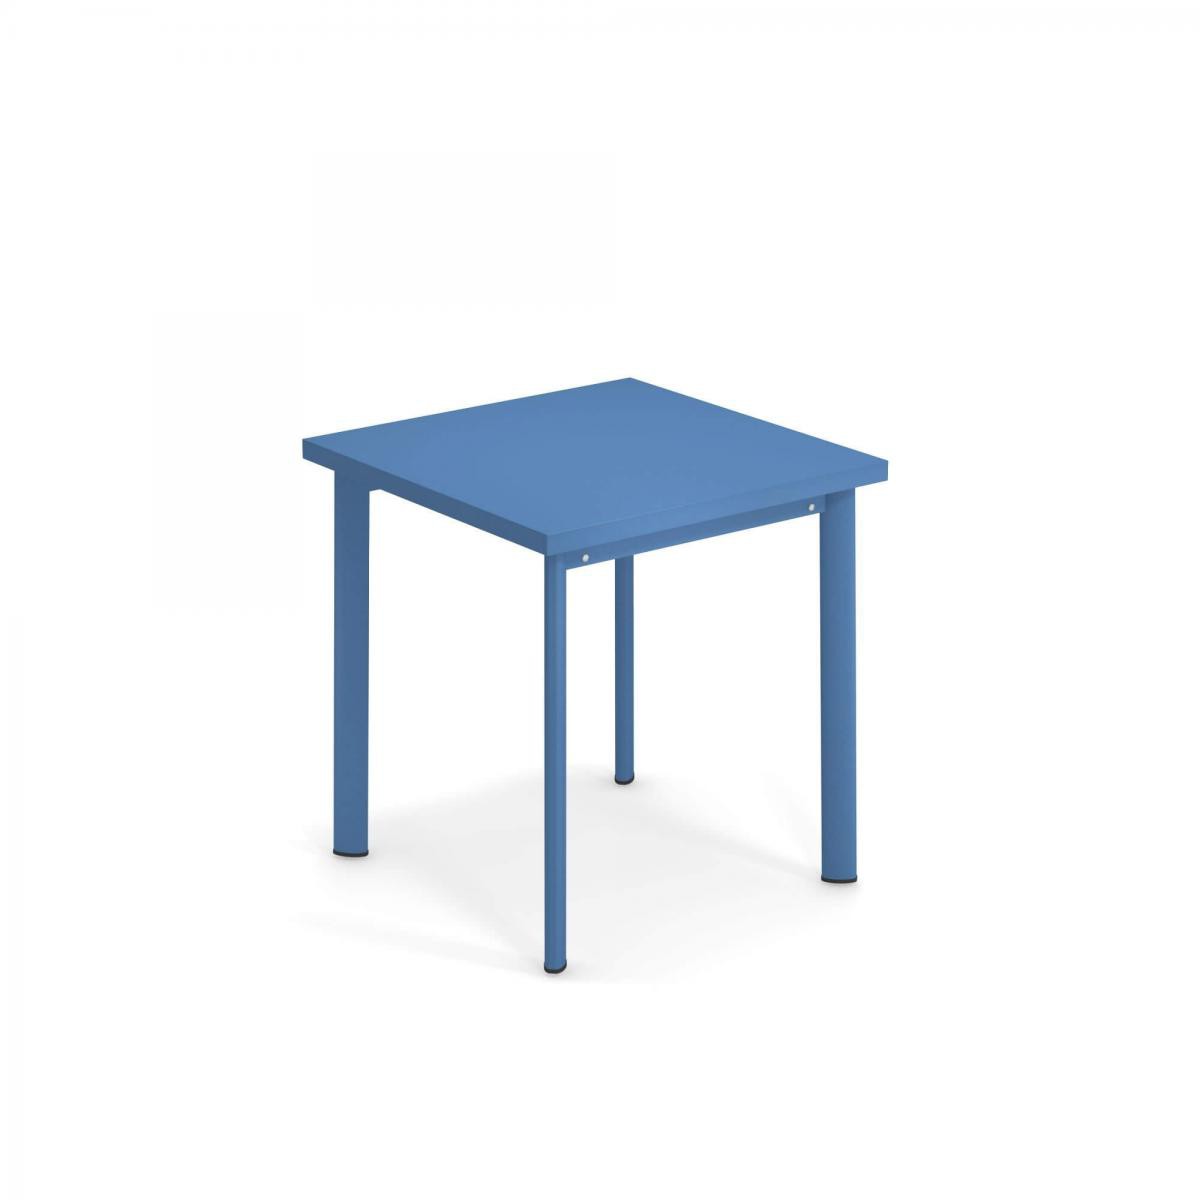 Emu - Table Star - 70 x 70 cm - bleu marine - Tables de jardin